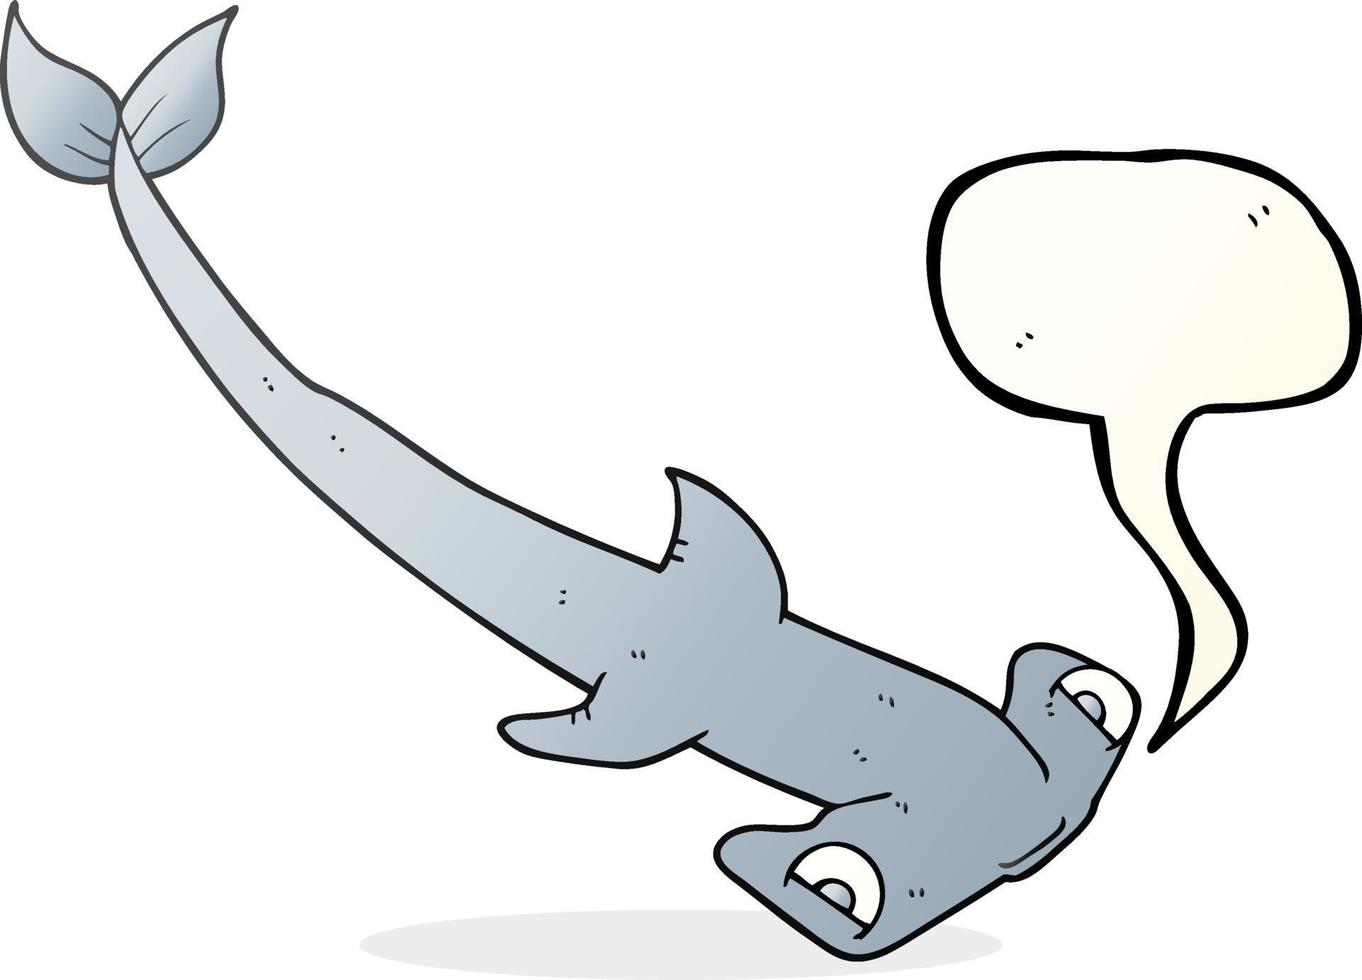 freehand drawn speech bubble cartoon hammerhead shark vector